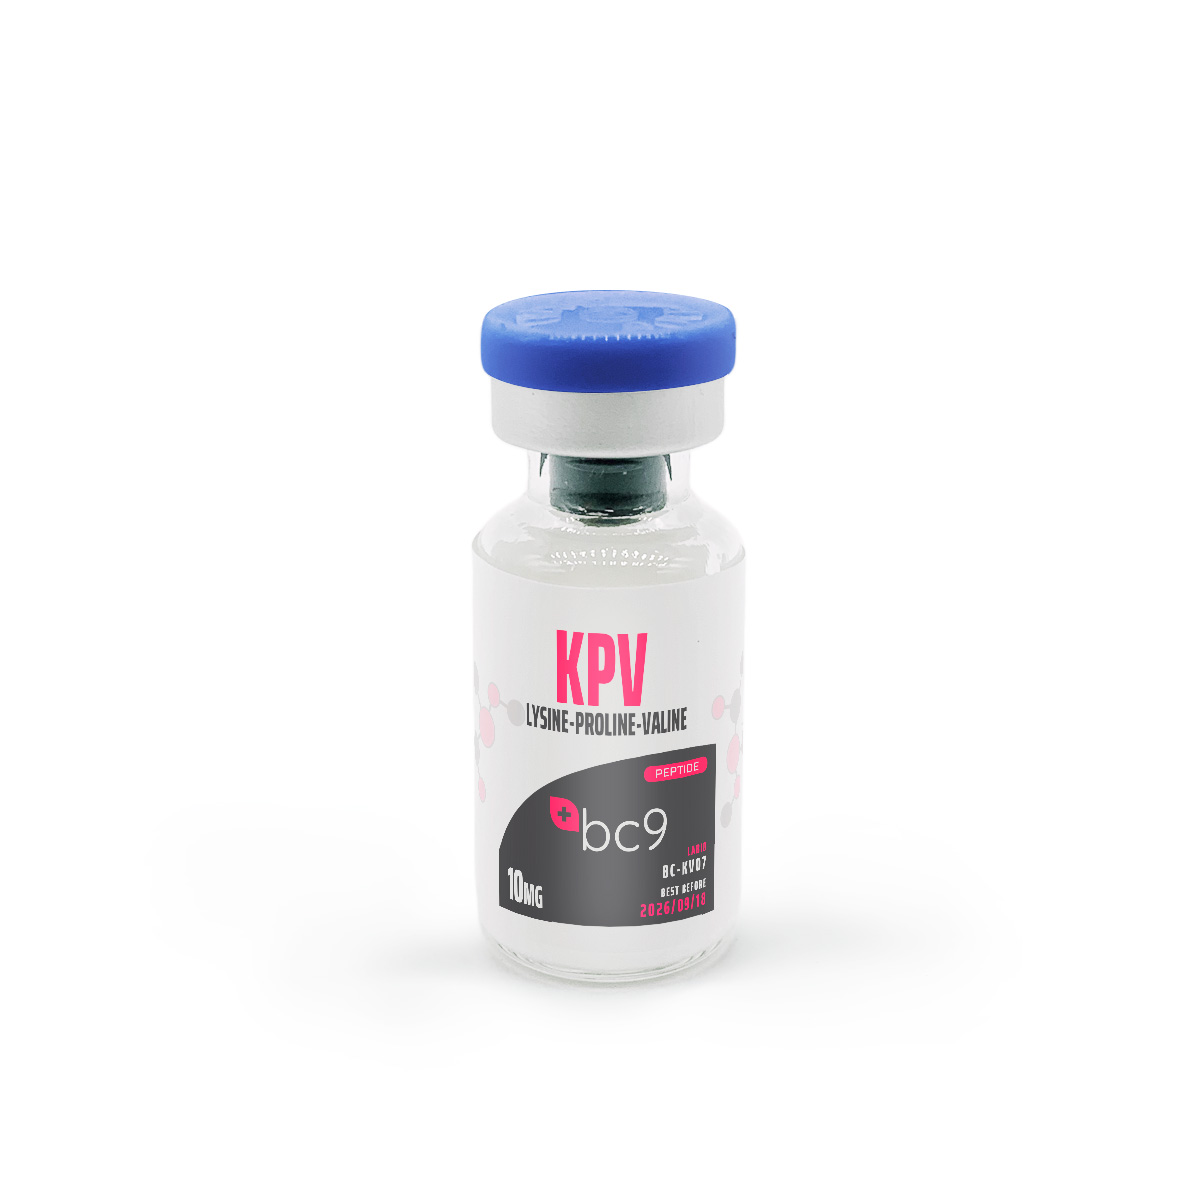 KPV (Lysine-Proline-Valine) Peptide for Sale | BC9.org